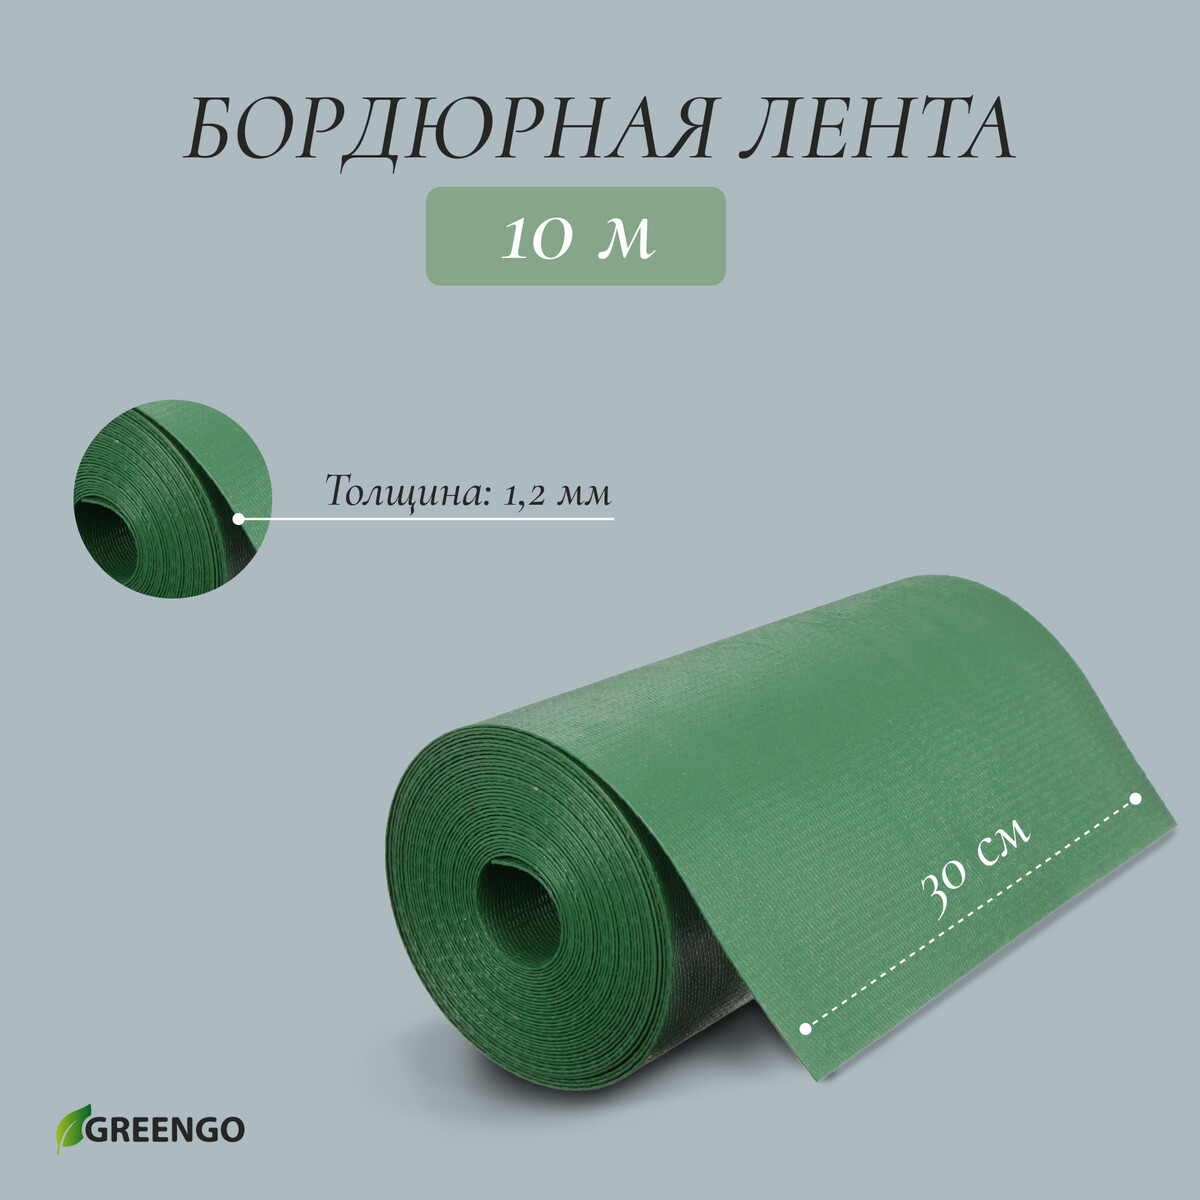 Лента бордюрная, 0.3 × 10 м, толщина 1.2 мм, пластиковая, зеленая, greengo лента бордюрная 0 15 × 9 м толщина 1 2 мм пластиковая фигурная красная